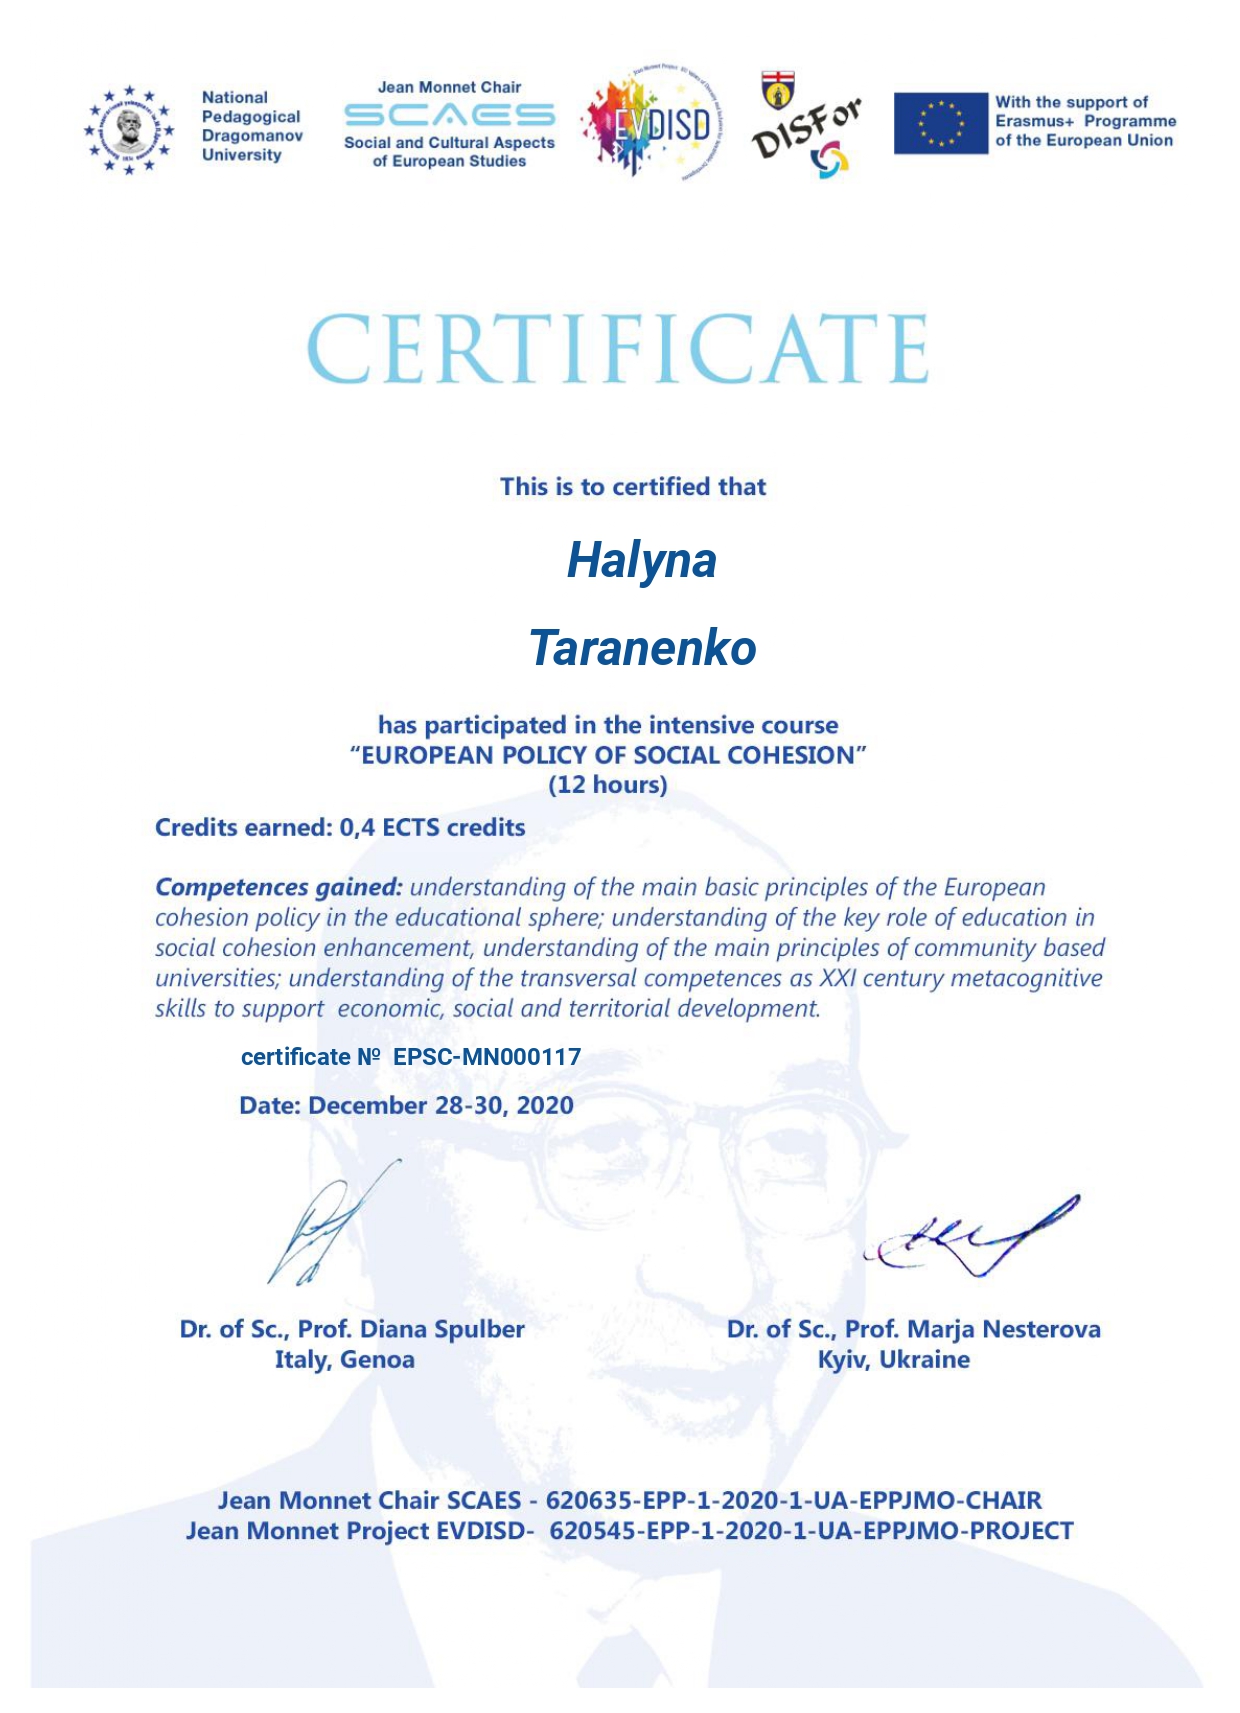 Тараненко_Certificate_28-30.12.20__page-0001